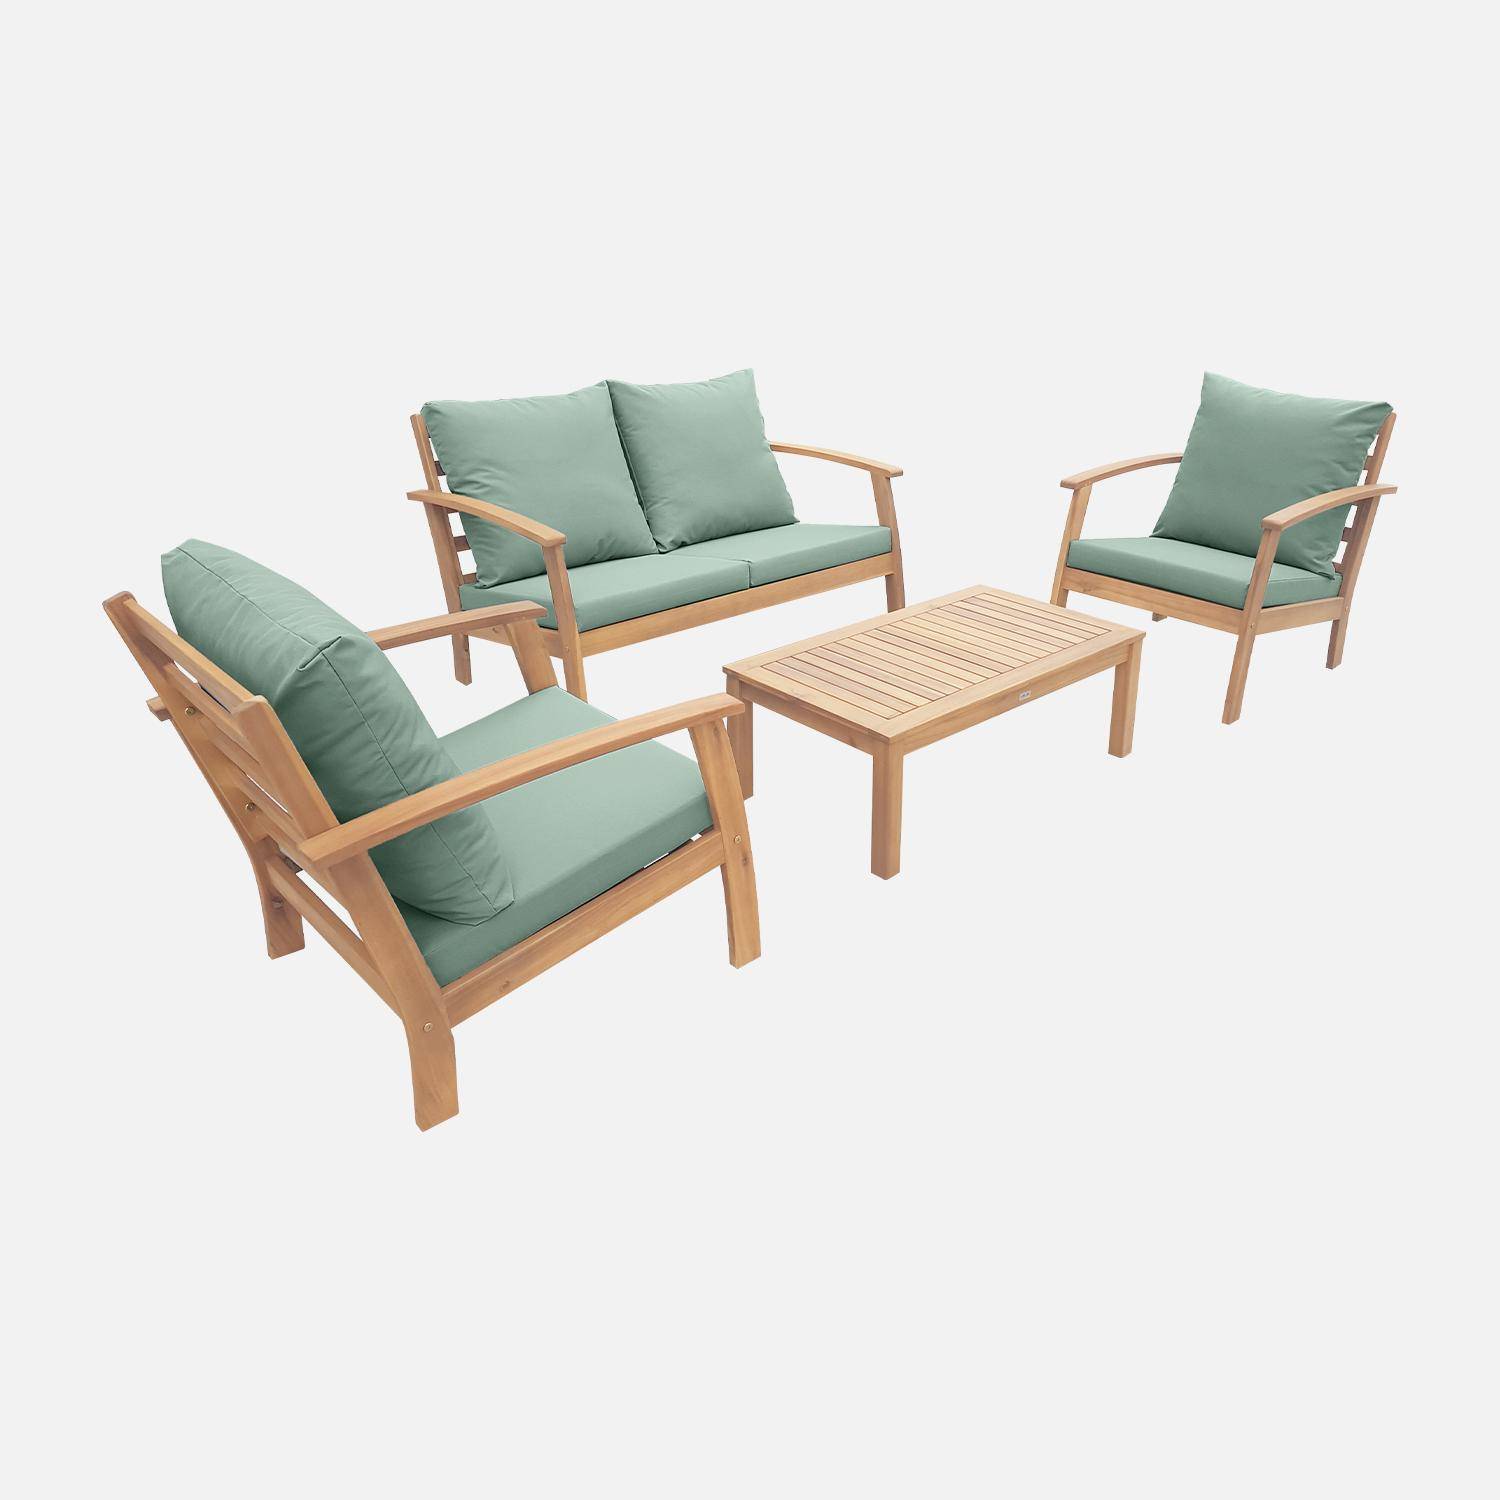 4-seater wooden garden sofa - Acacia wood sofa, armchairs and coffee table, designer piece  - Ushuaia - Sage green Photo2